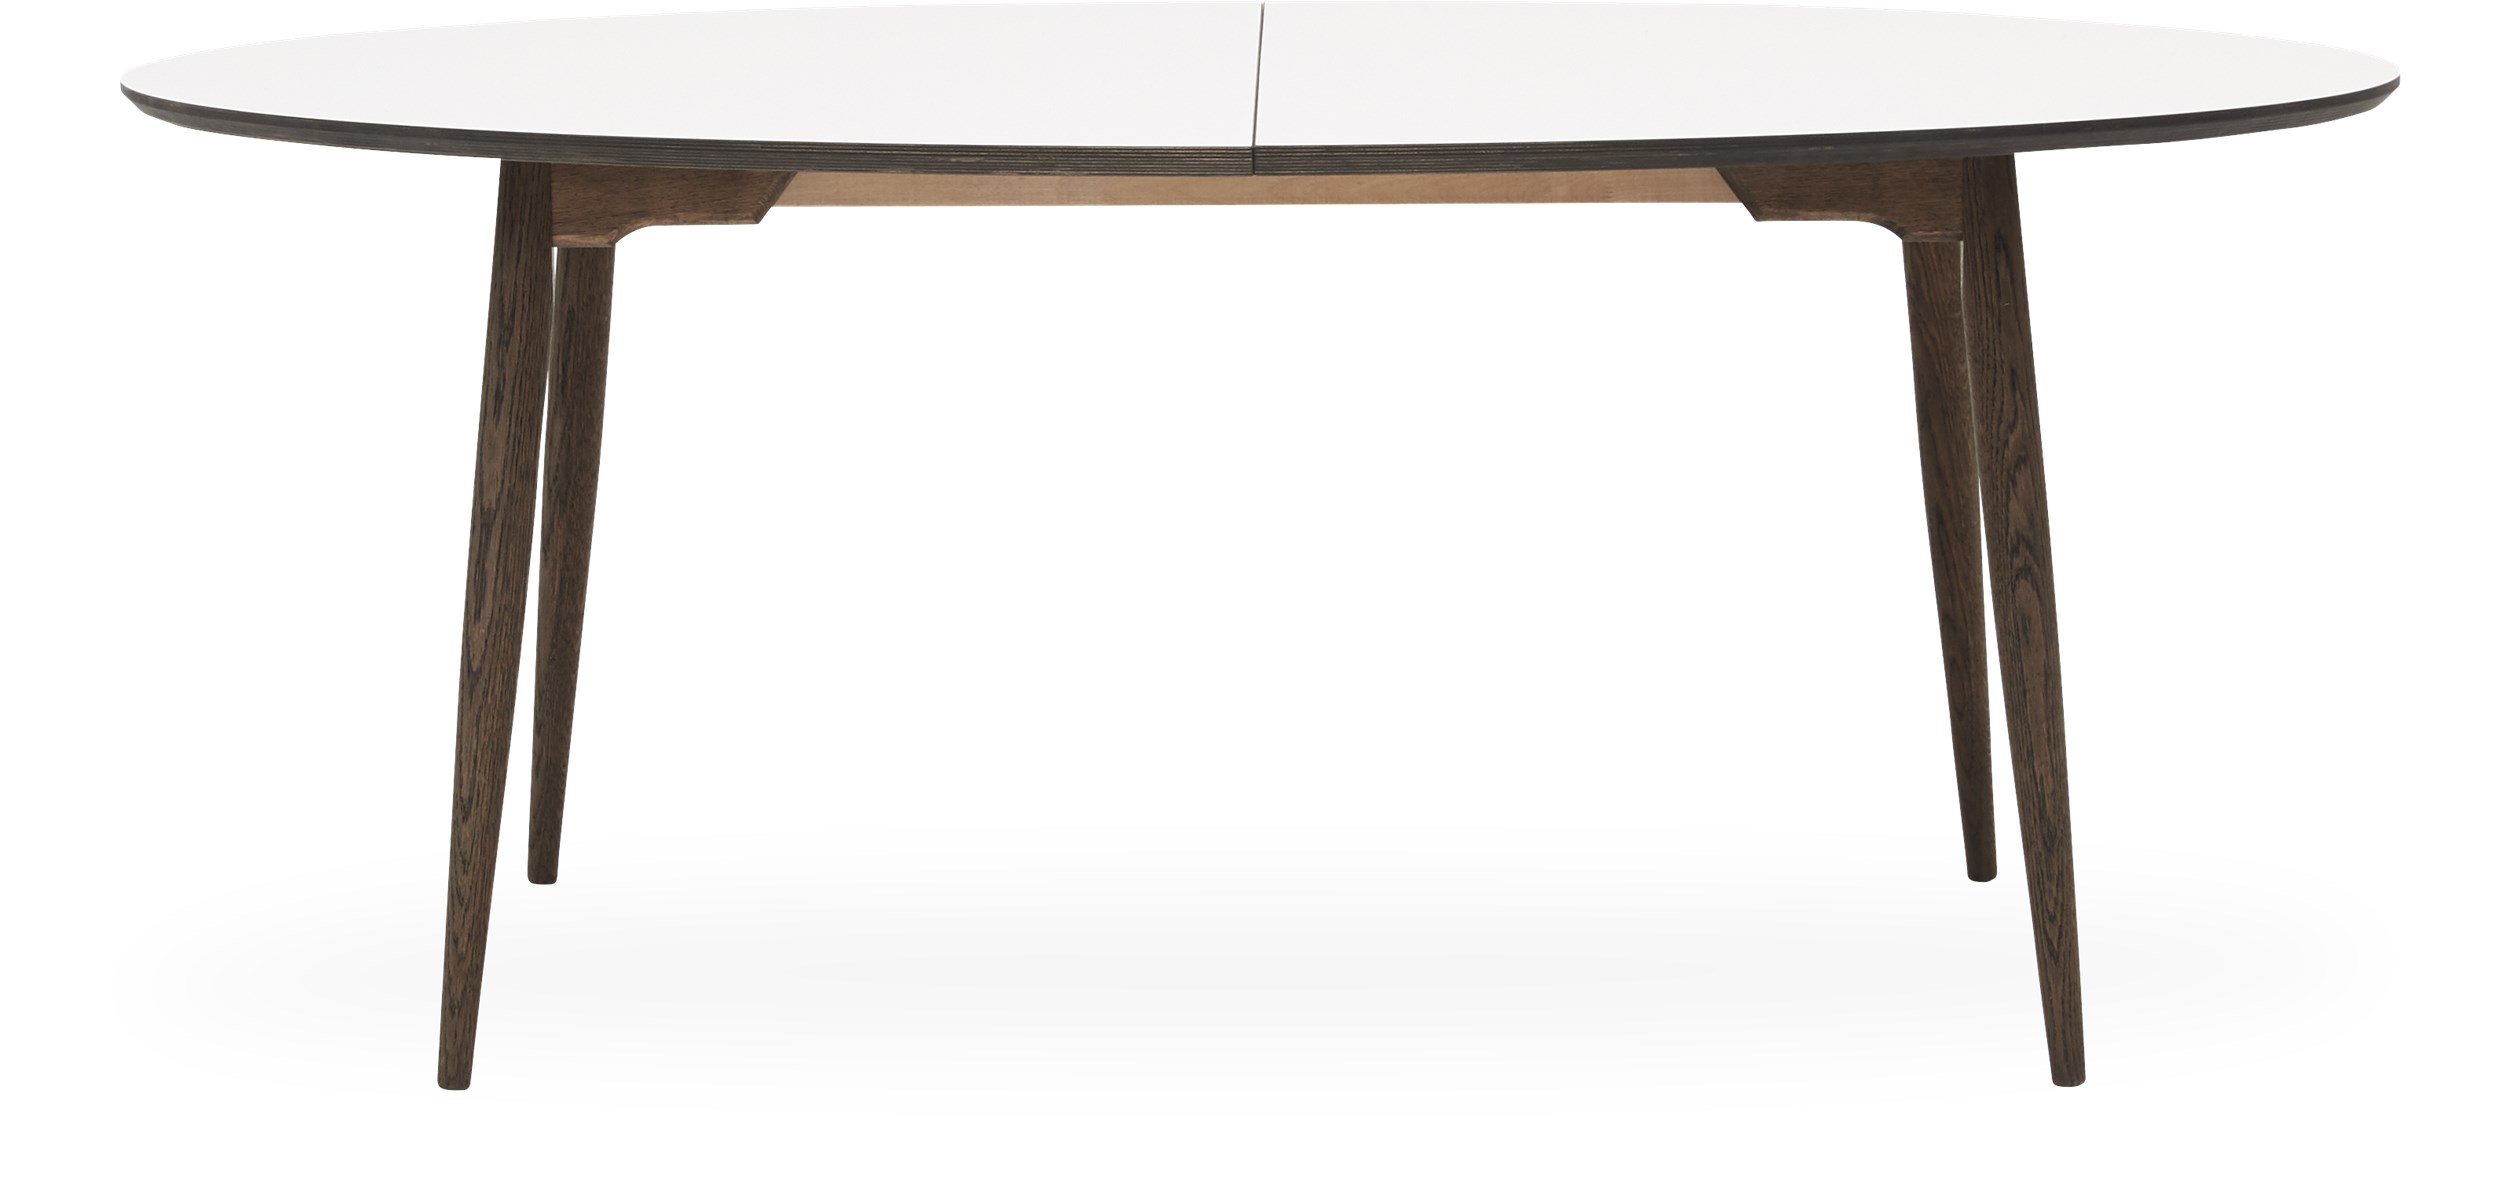 Haslev 7-H Matbord 180 x 105 x 74 cm - Topp i vit laminat, kant i mörk, gråoljad plywood och ben i mörk, gråoljad, massiv ek